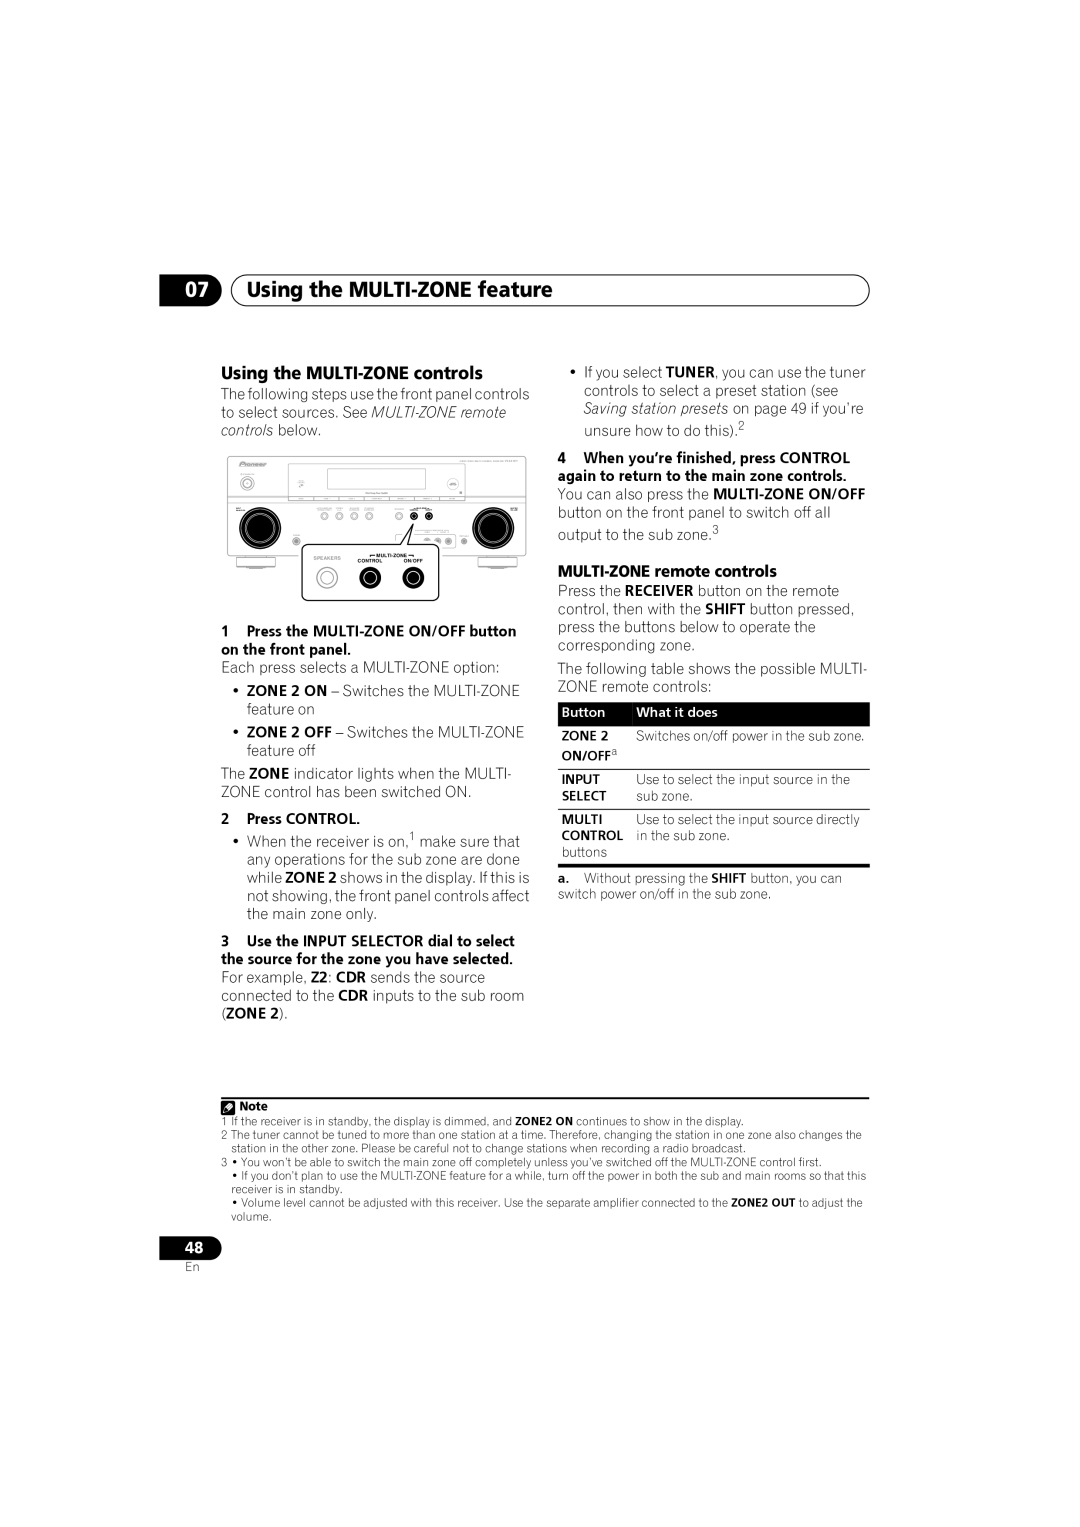 Pioneer VSX-819H-S manual 07Using the MULTI-ZONEfeature, Using the MULTI-ZONEcontrols, MULTI-ZONEremote controls 